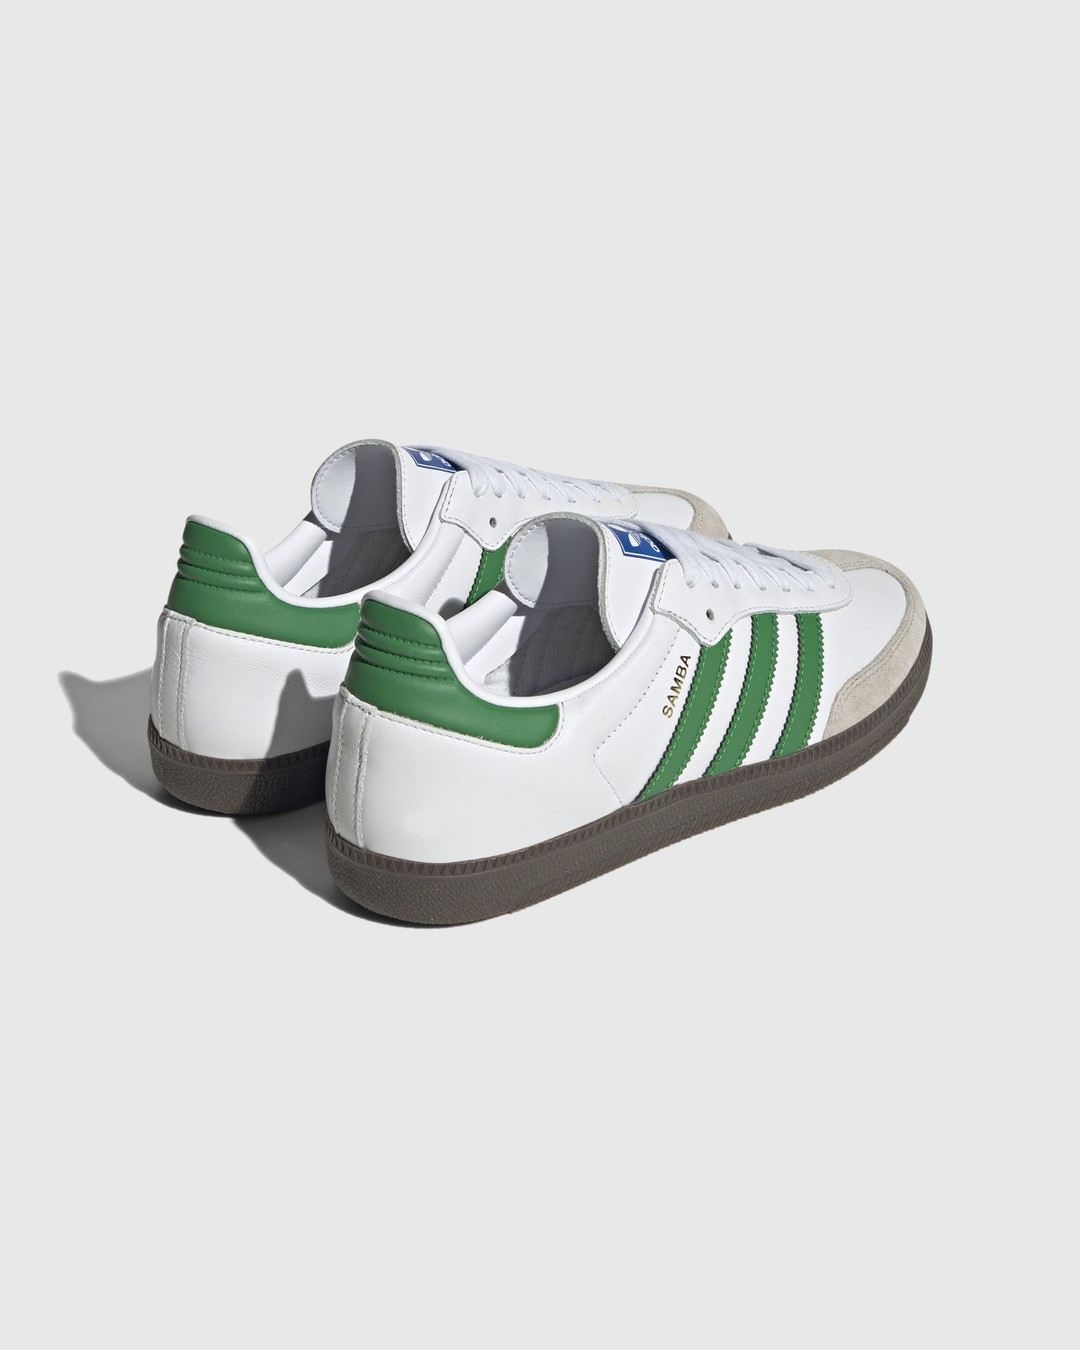 Adidas – Samba OG White/Green - Sneakers - White - Image 3